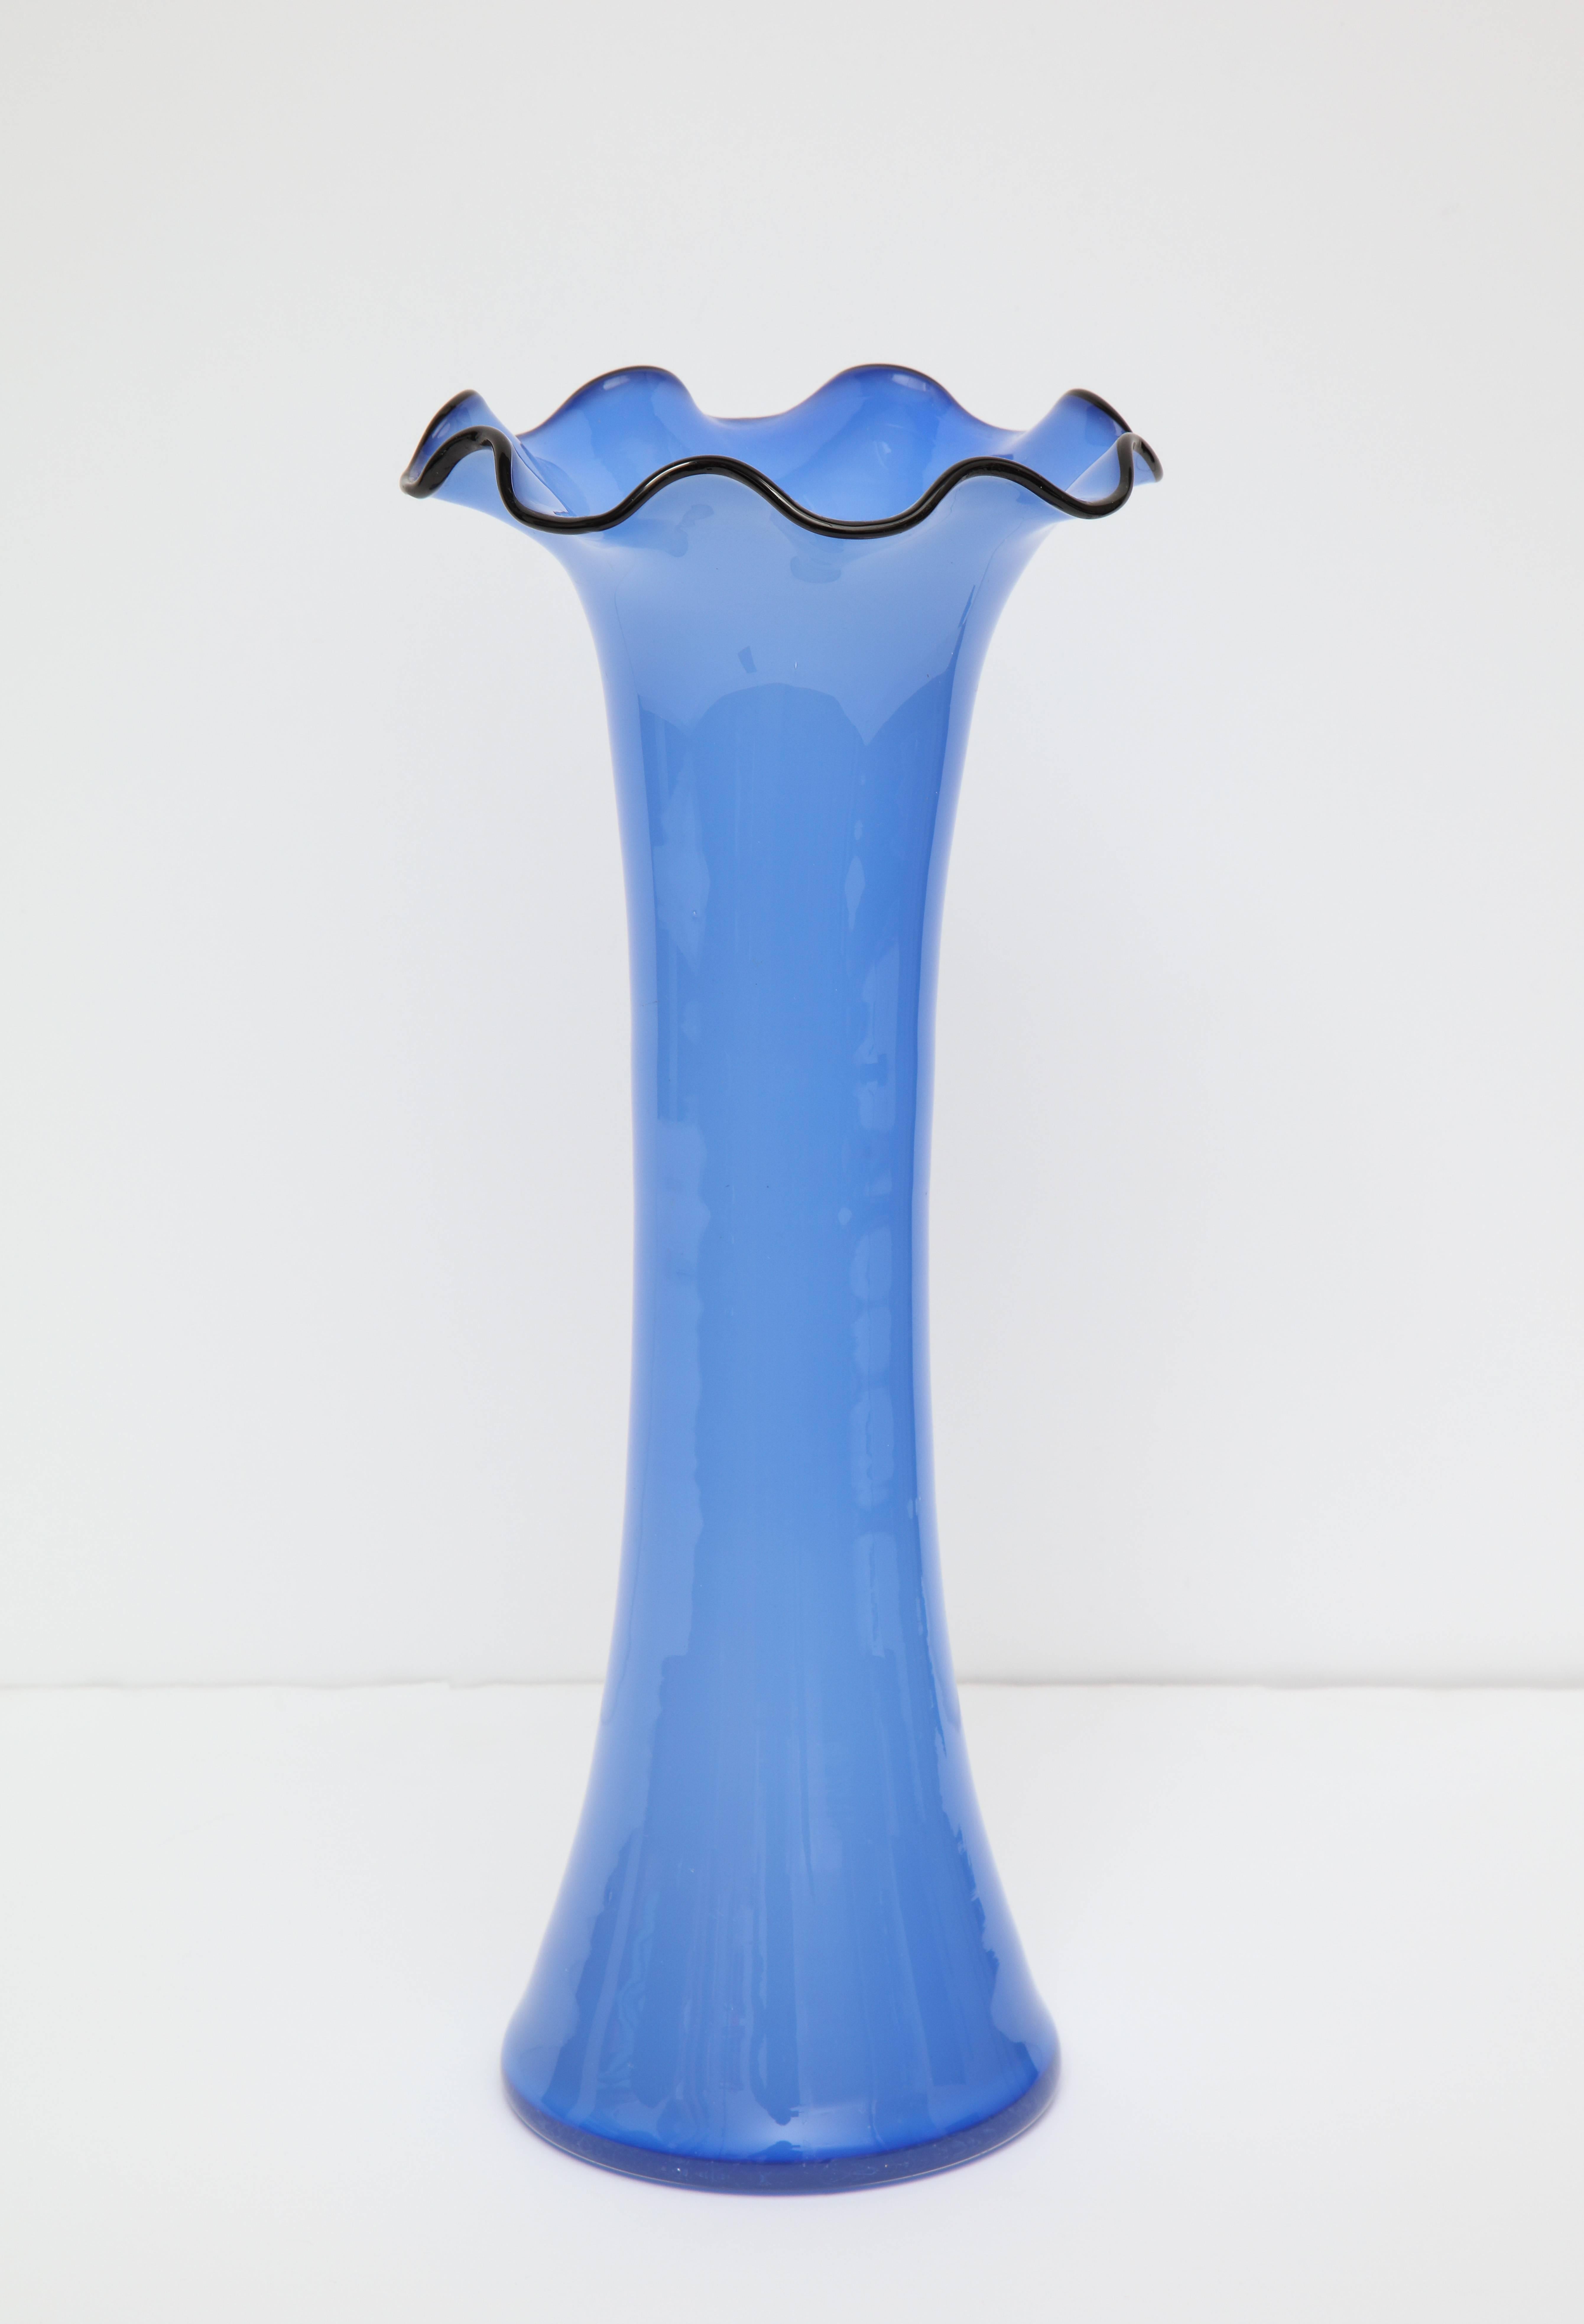 Czechoslovakian handblown blue glass vase with a flared flower petal shaped top rimmed in black.
Czechoslovakia, circa 1920
Size: 14